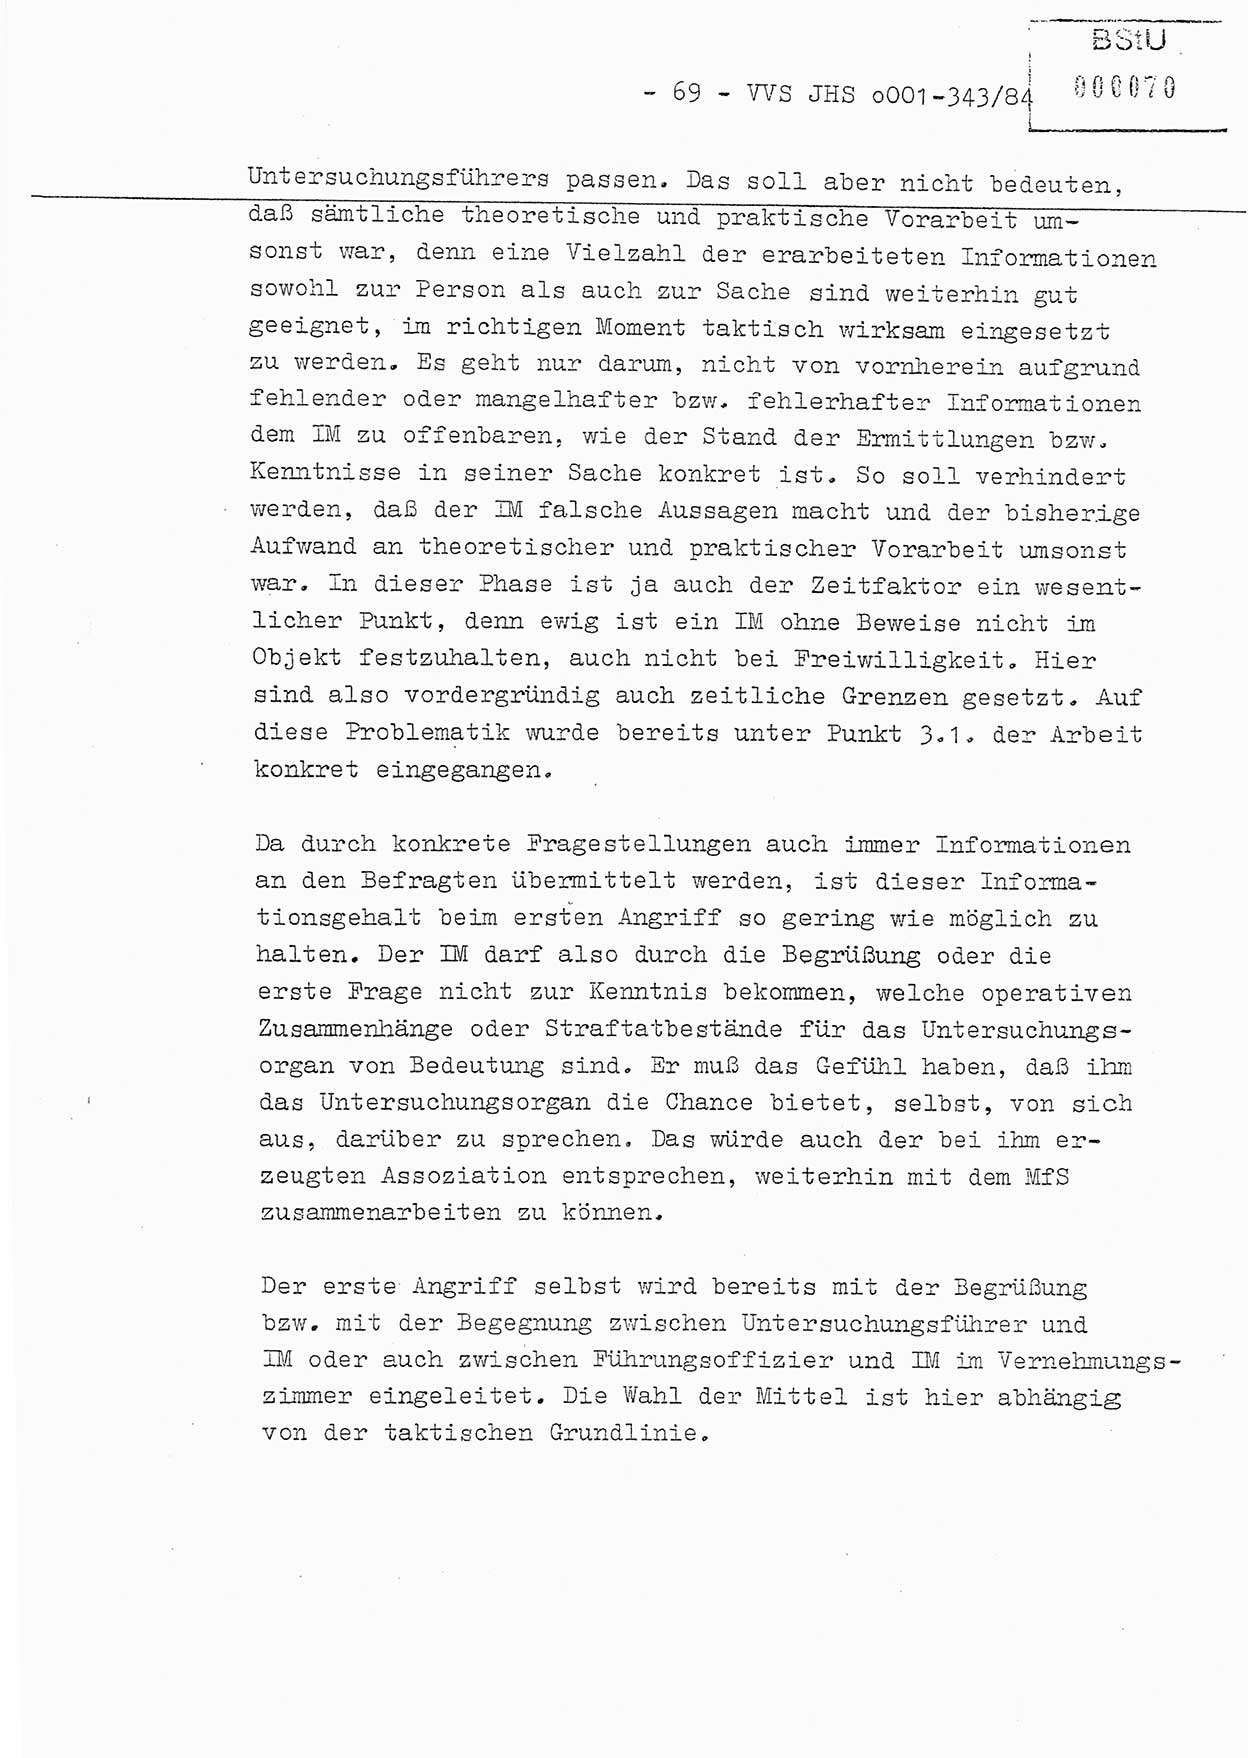 Diplomarbeit, Oberleutnant Bernd Michael (HA Ⅸ/5), Oberleutnant Peter Felber (HA IX/5), Ministerium für Staatssicherheit (MfS) [Deutsche Demokratische Republik (DDR)], Juristische Hochschule (JHS), Vertrauliche Verschlußsache (VVS) o001-343/84, Potsdam 1985, Seite 69 (Dipl.-Arb. MfS DDR JHS VVS o001-343/84 1985, S. 69)